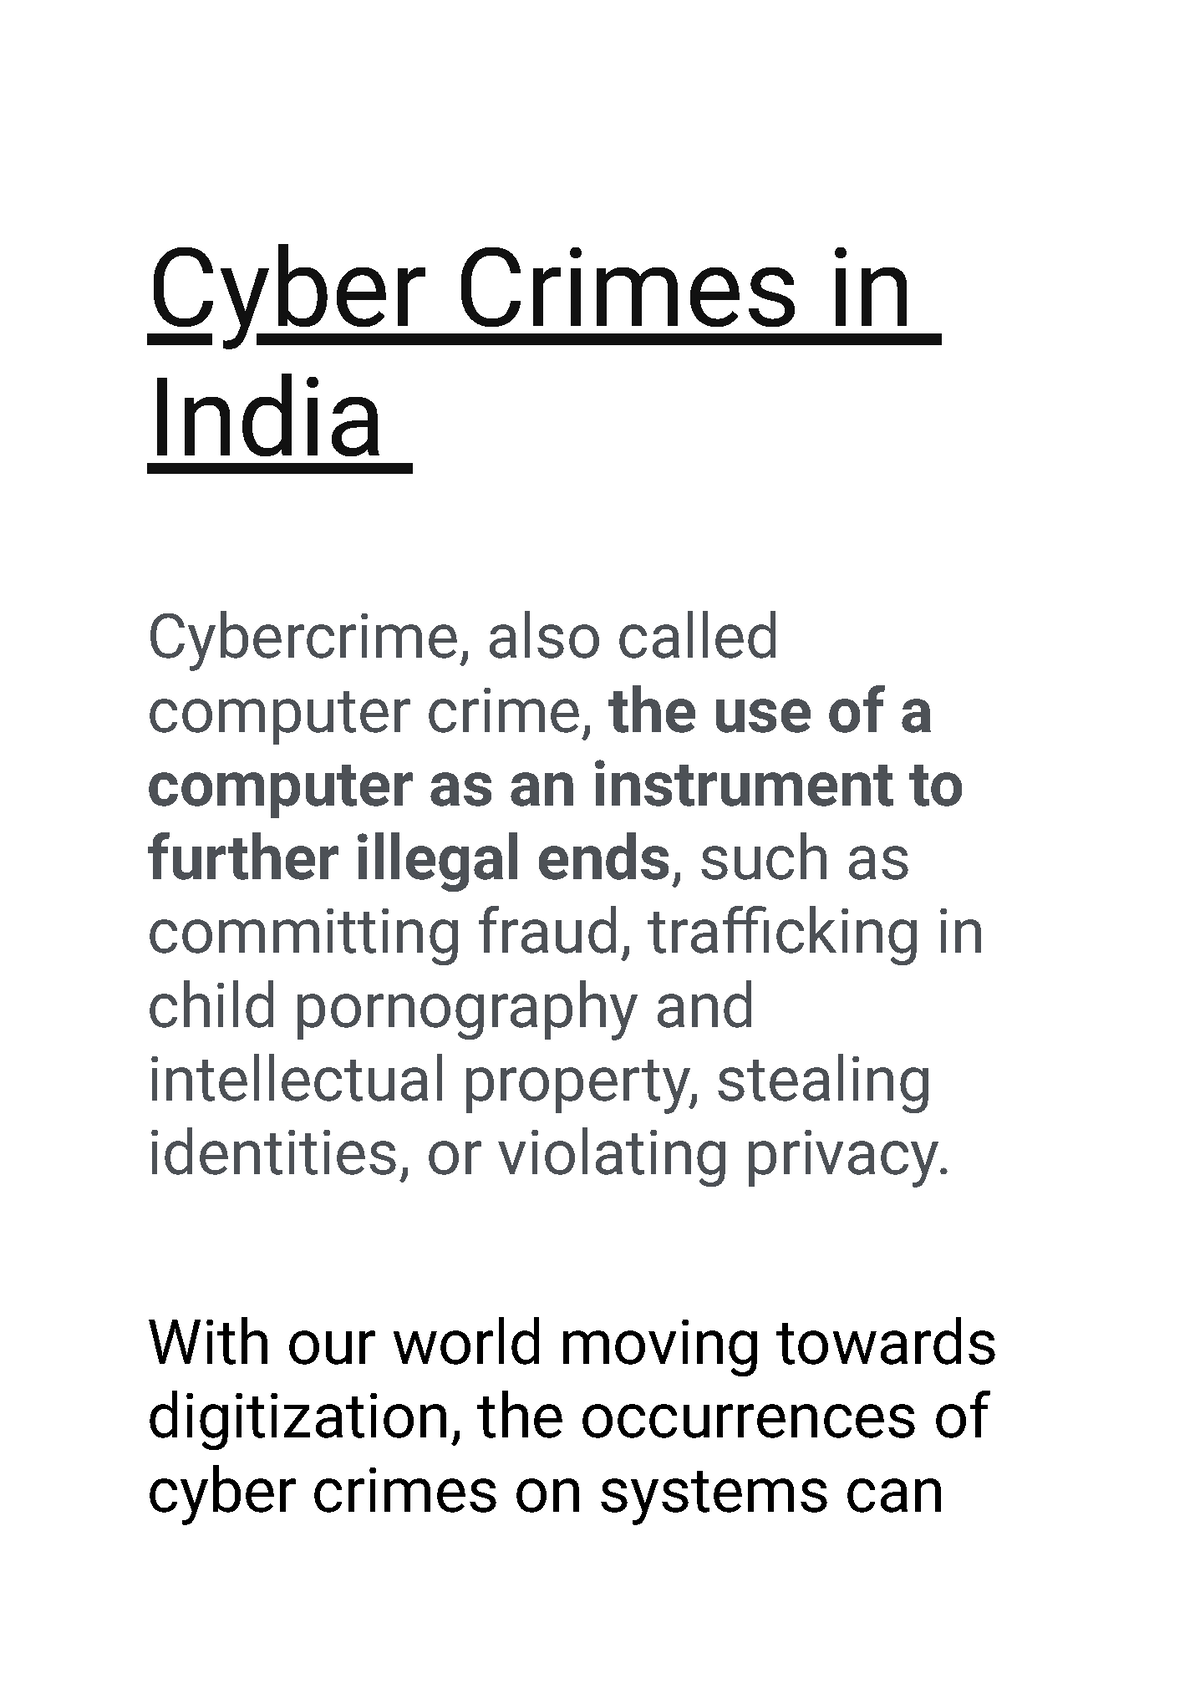 cyber crime in india essay